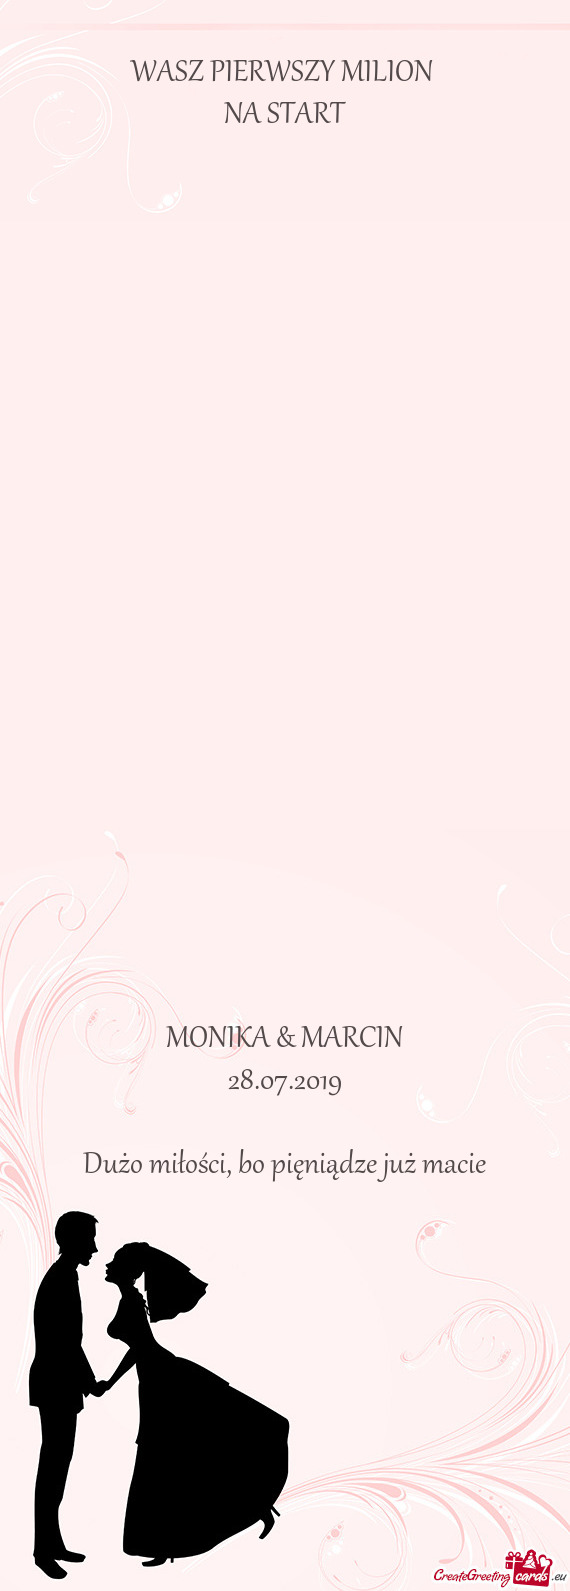 MONIKA & MARCIN